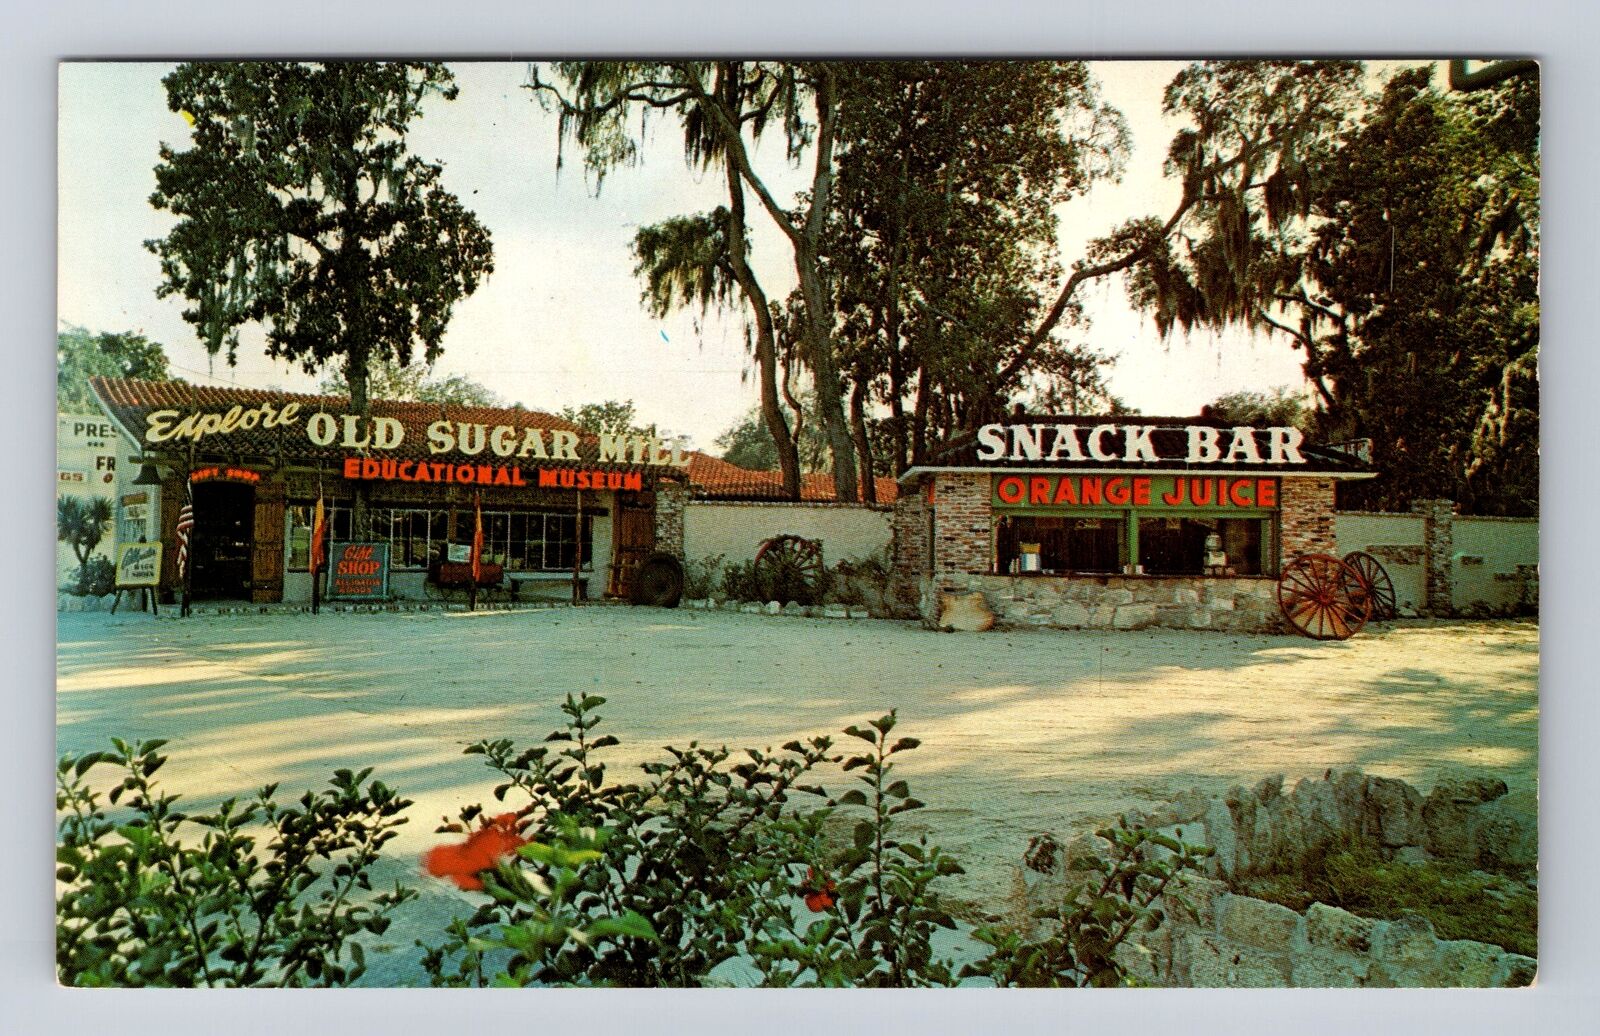 St Augustine FL-Florida, The Old Sugar Mill, Advertising, Vintage Postcard